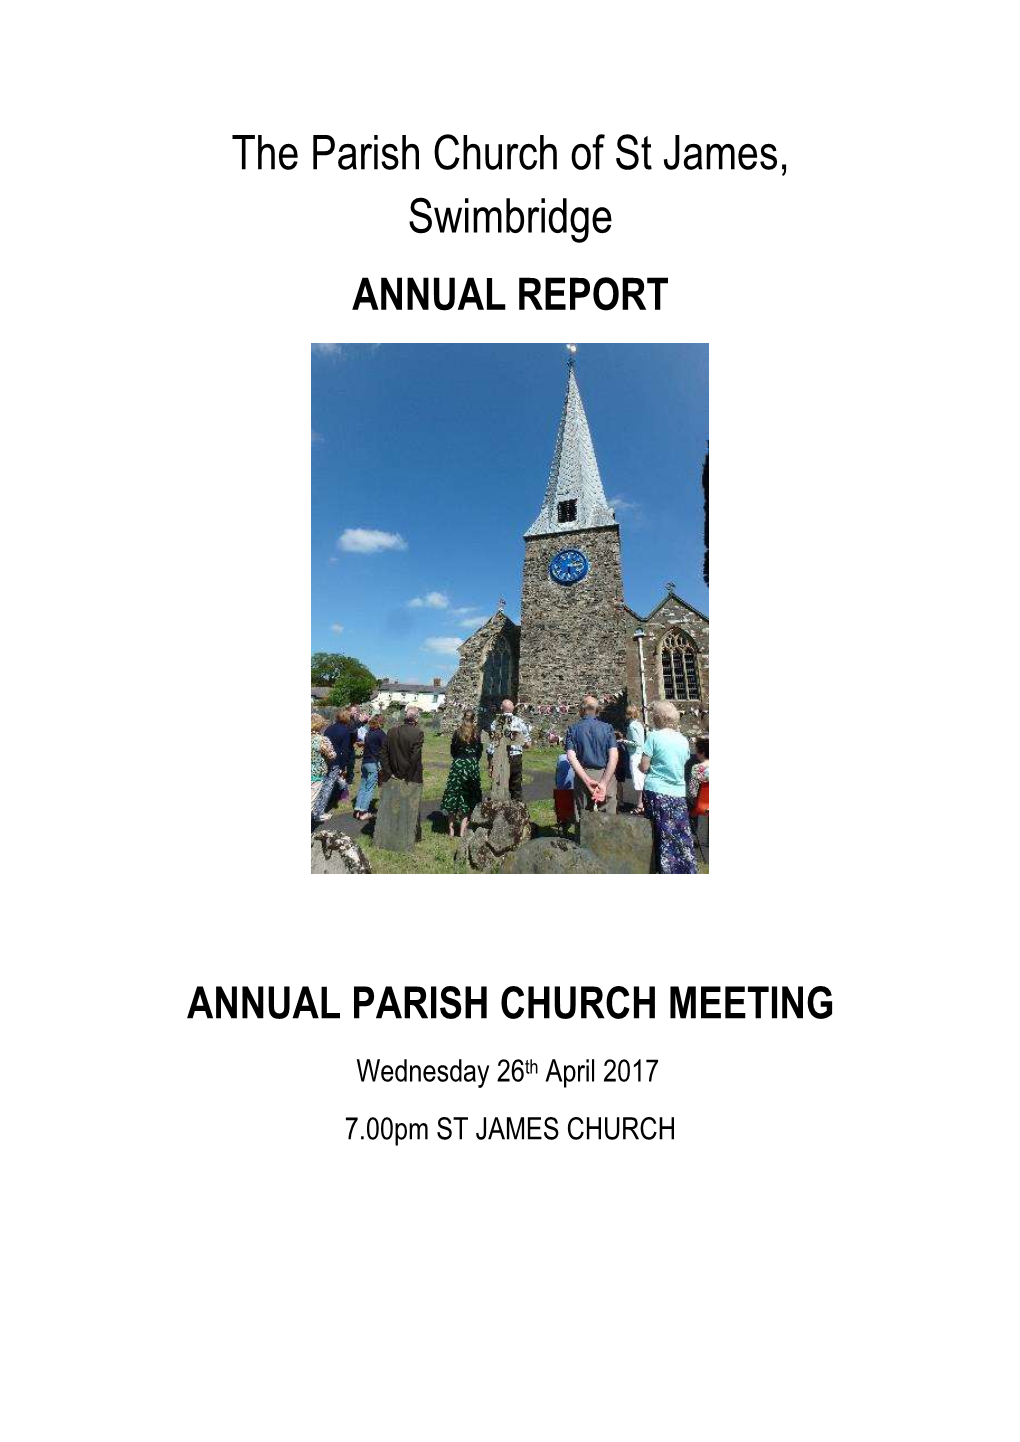 The Parish Church of St James, Swimbridge ANNUAL REPORT